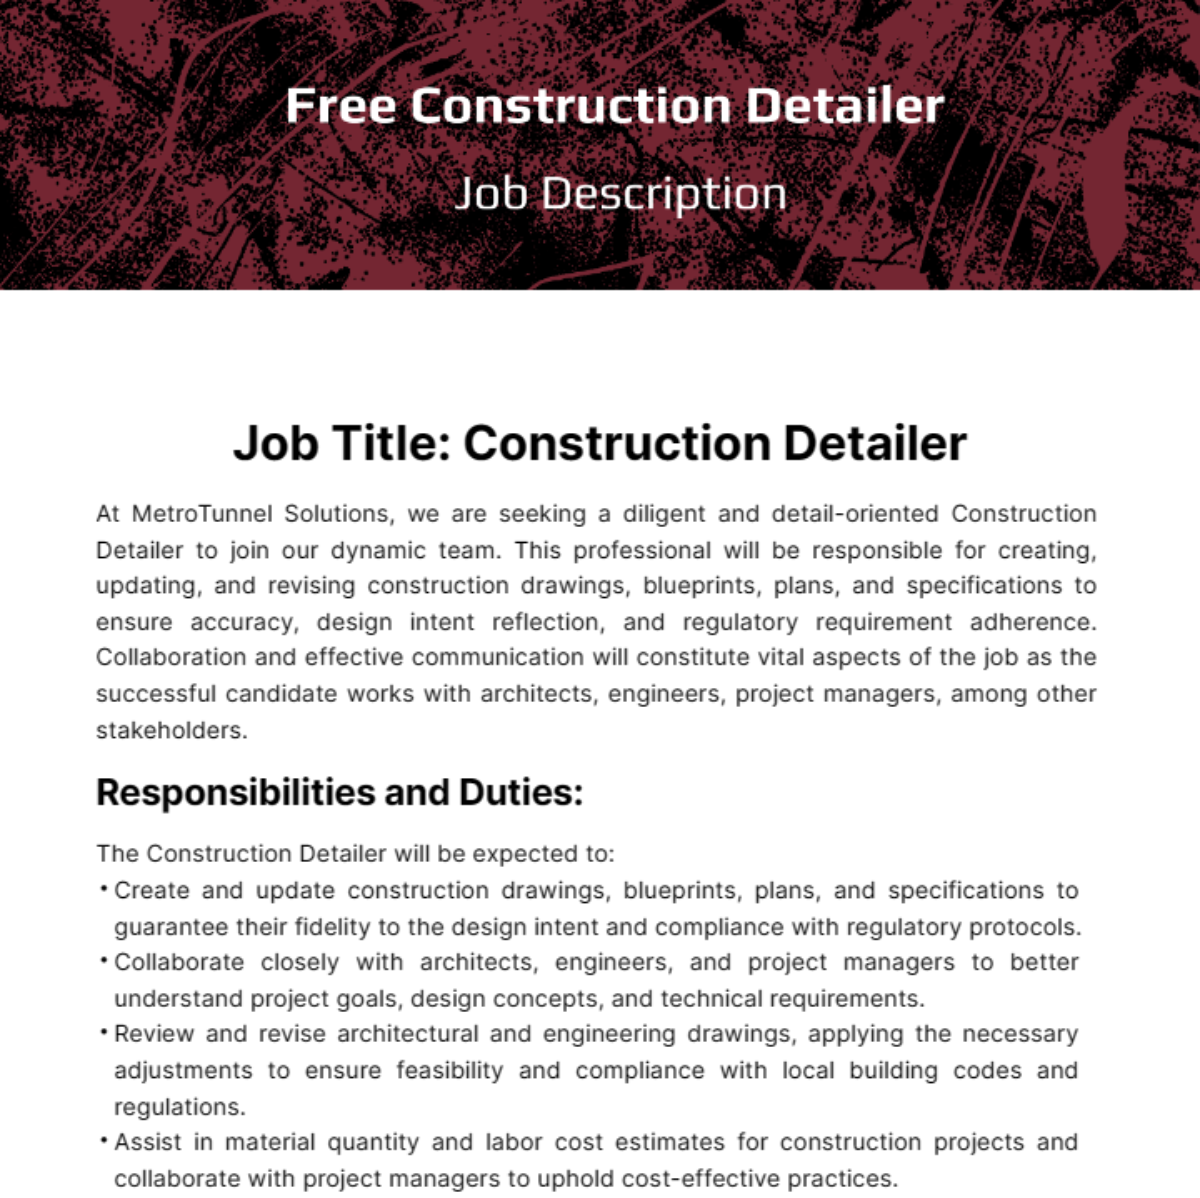 Free Construction Detailer Job Description Template